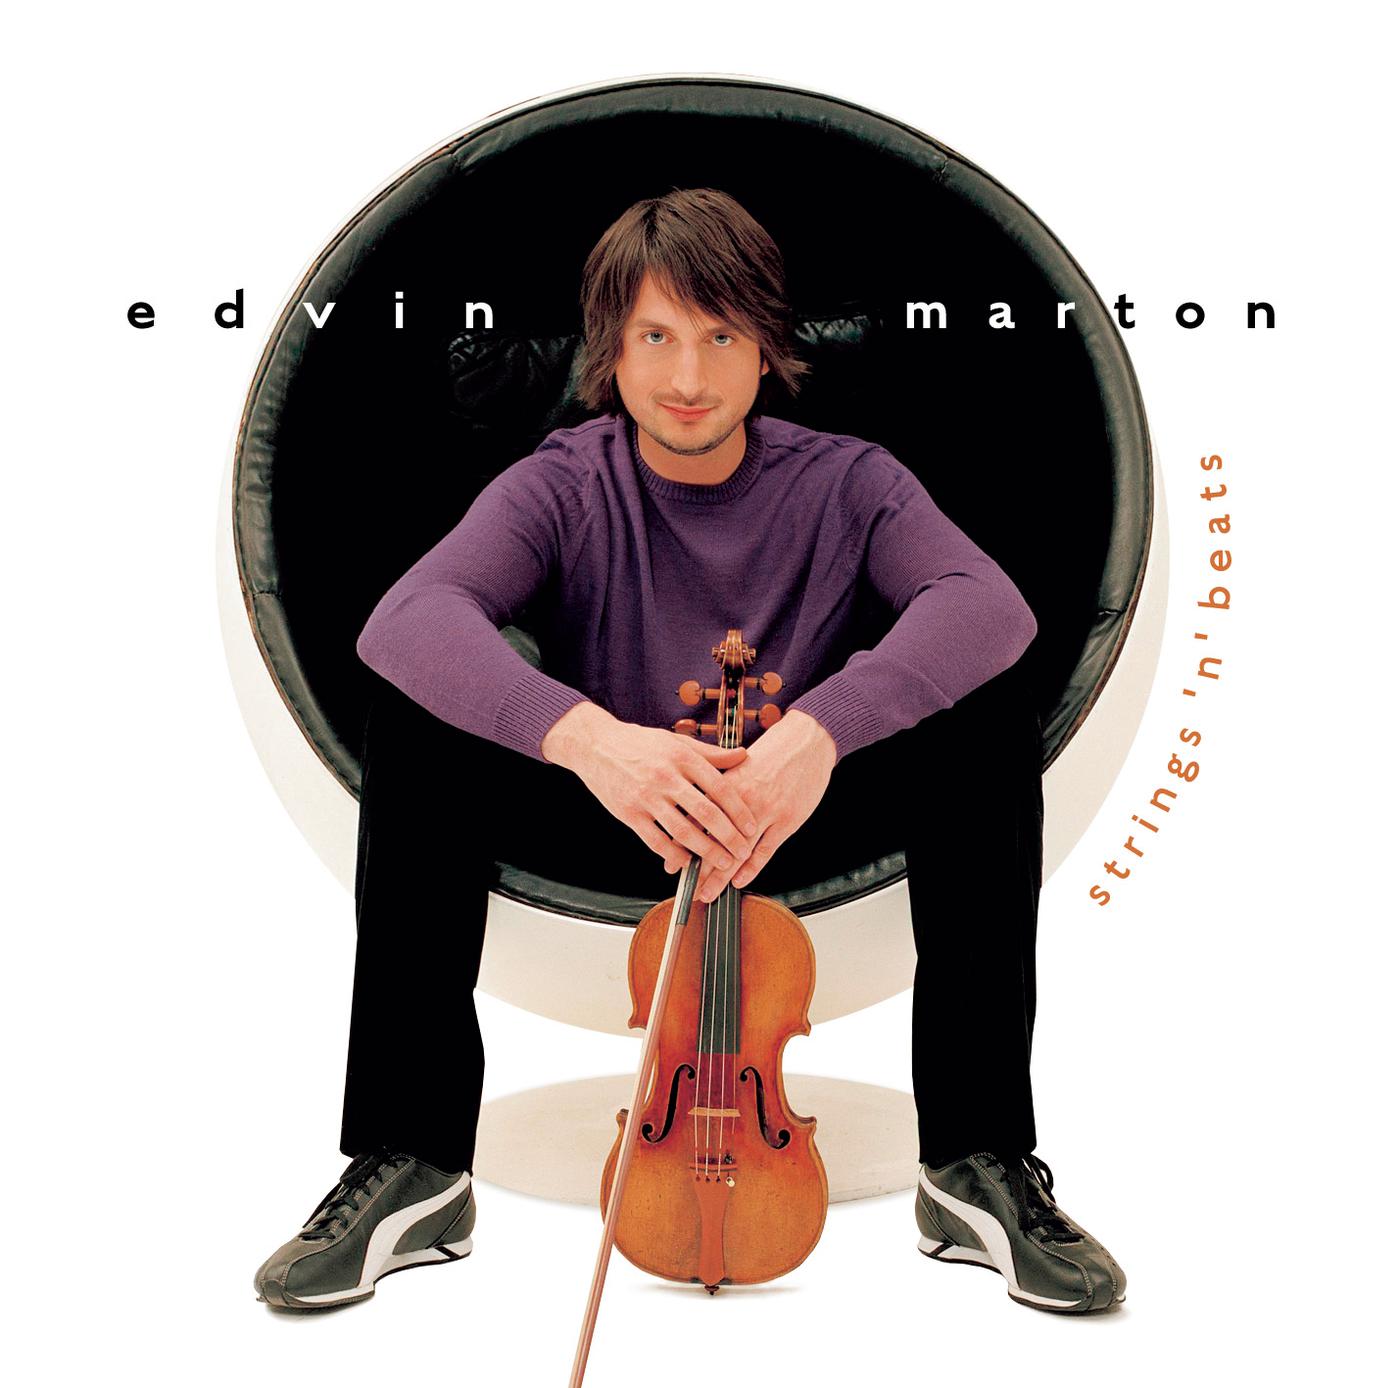 Edvin Marton - Magic Stradivarius